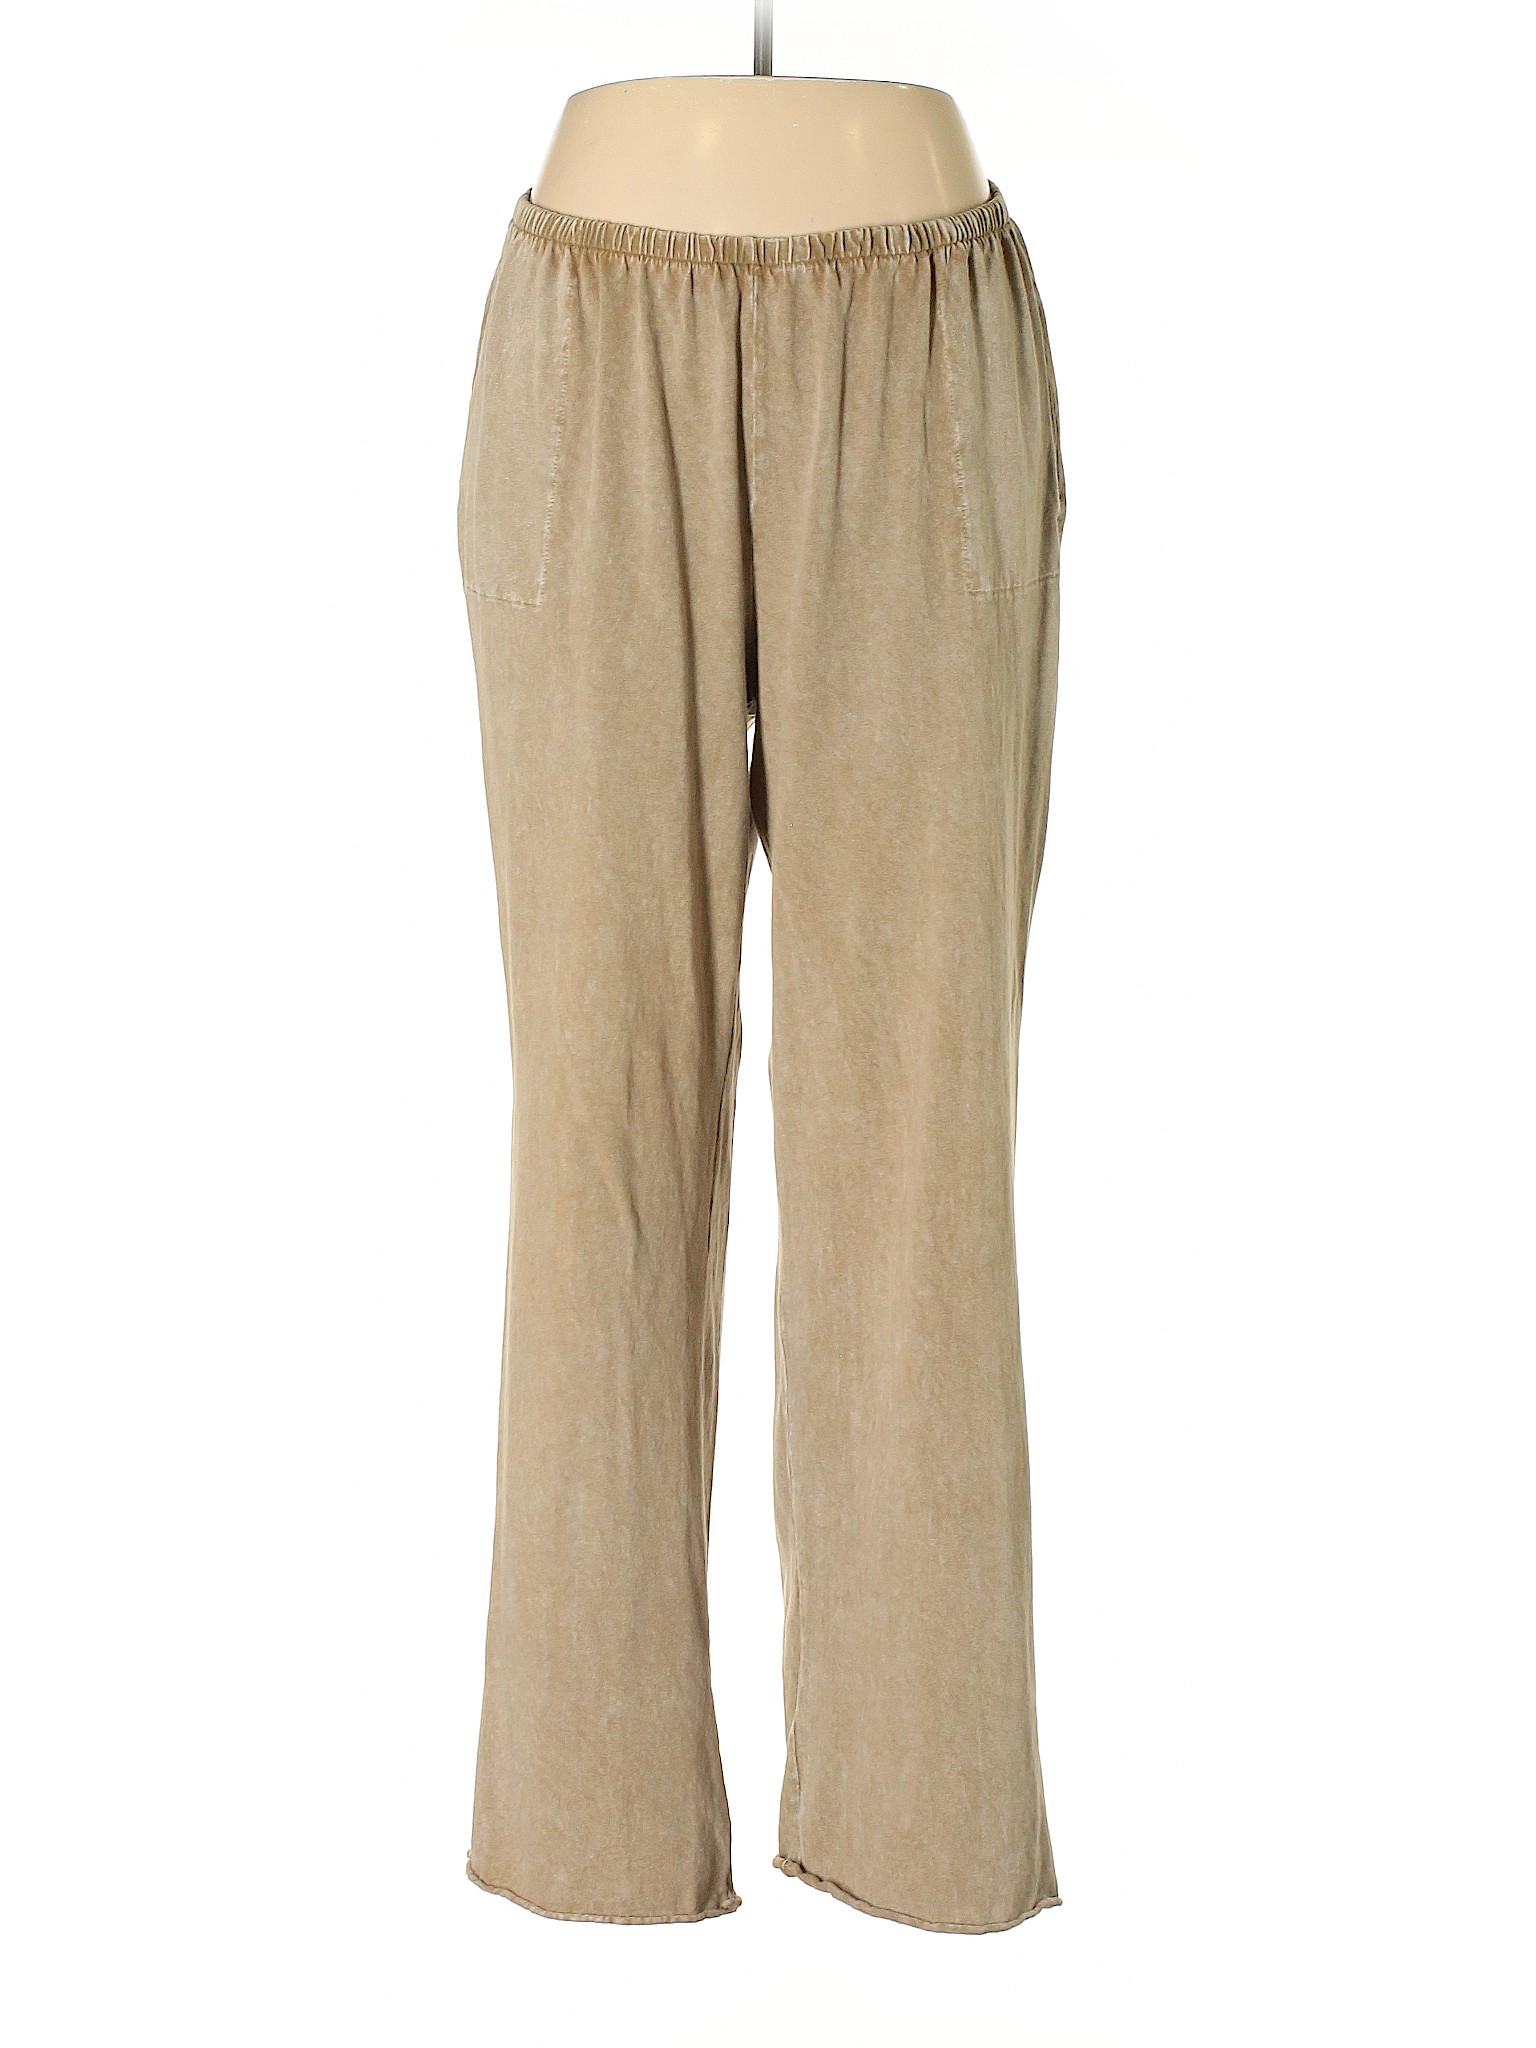 Fenini Tan Casual Pants Size XL - 85% off | thredUP